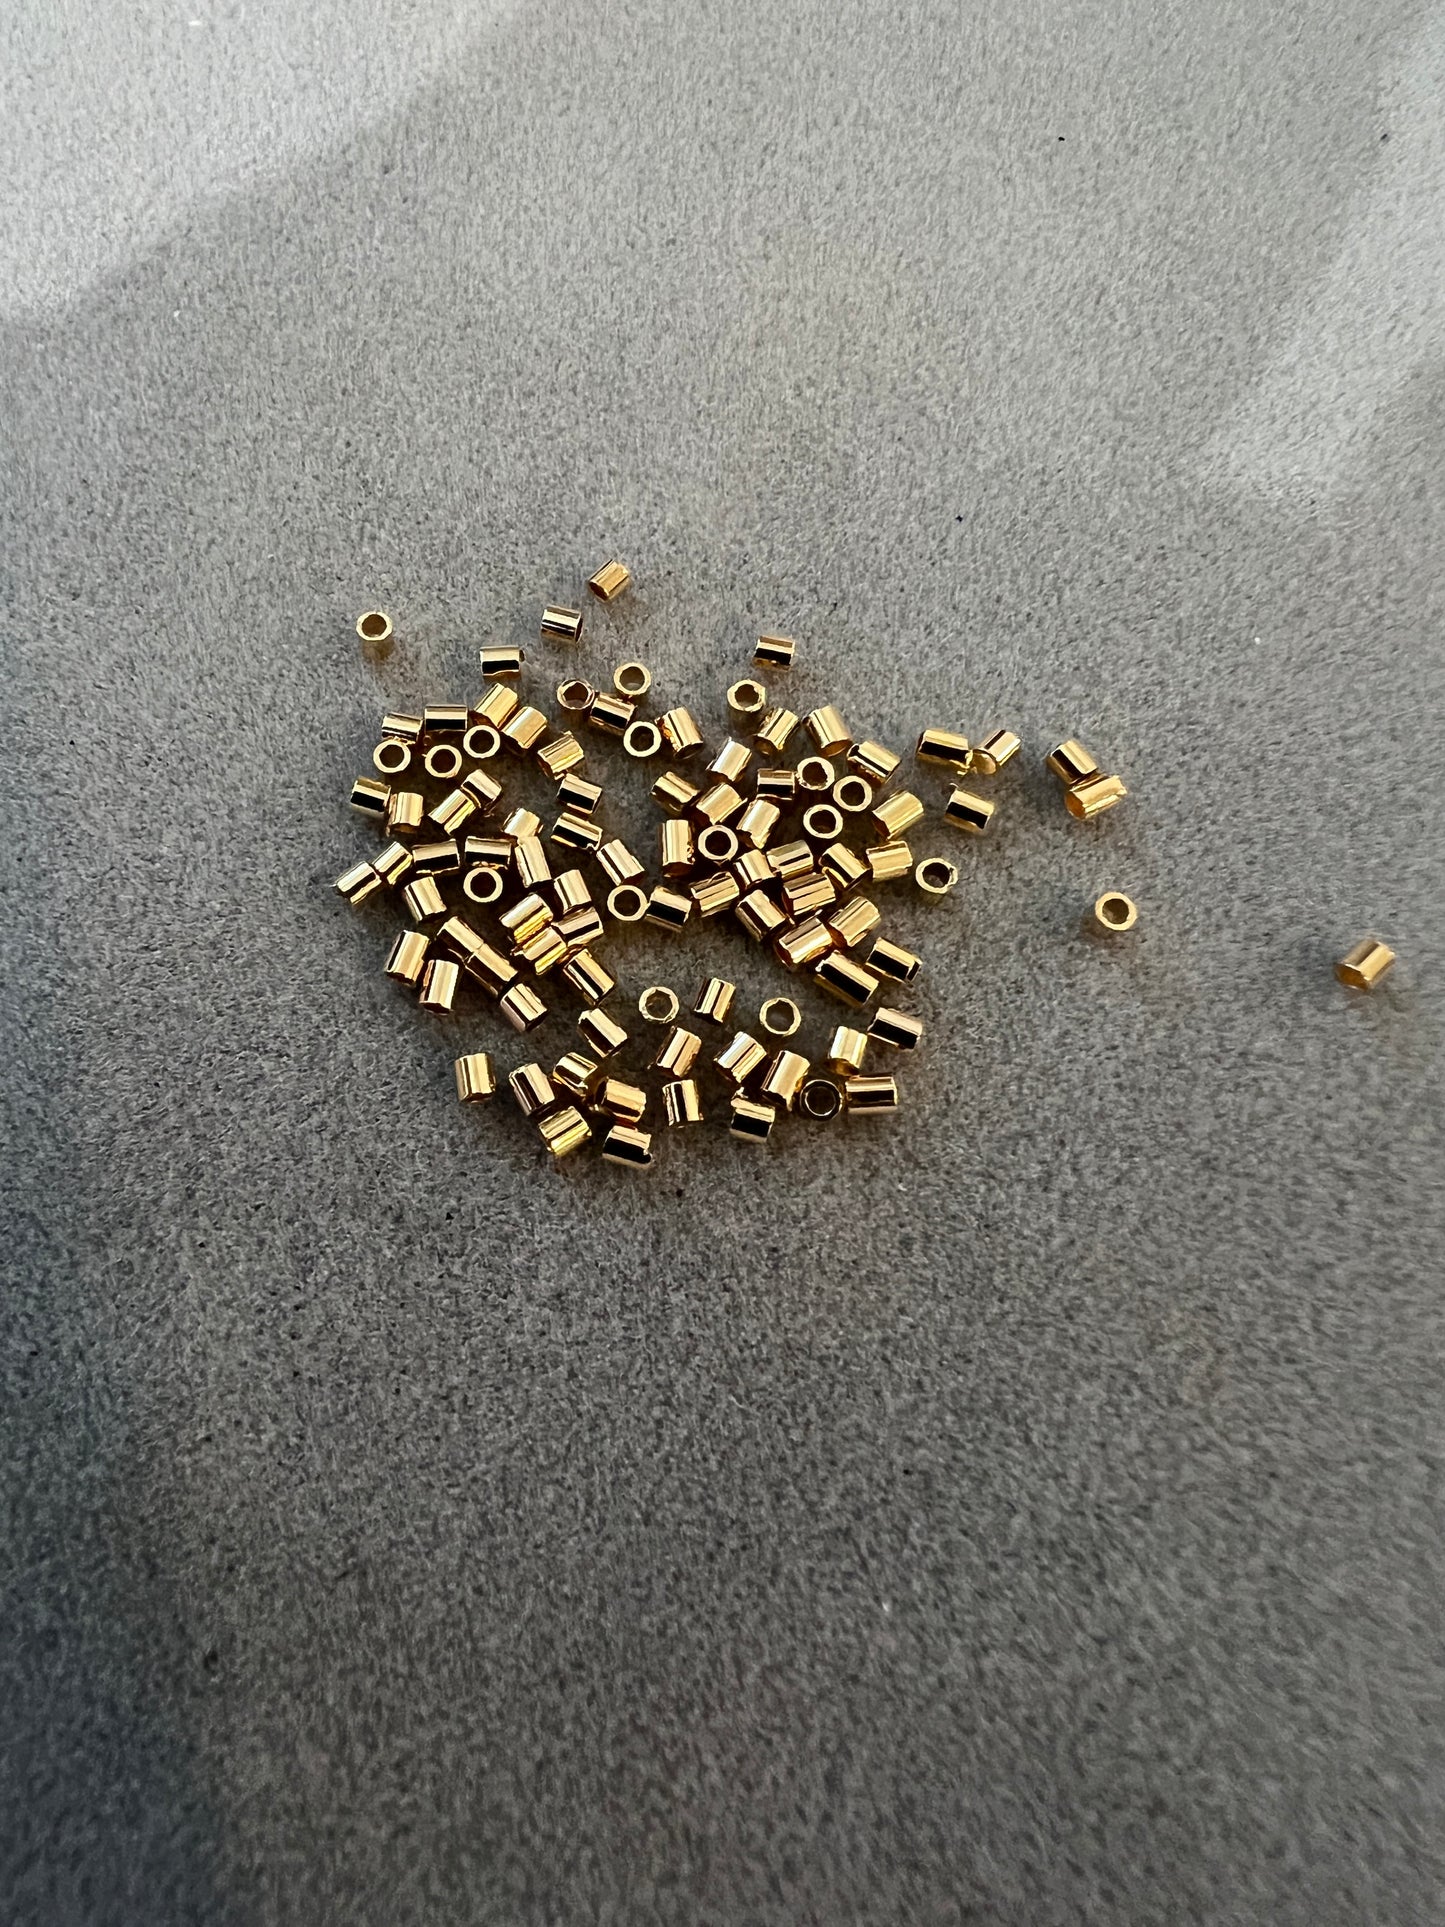 Crimp Gold Filled Qty 100 -24345